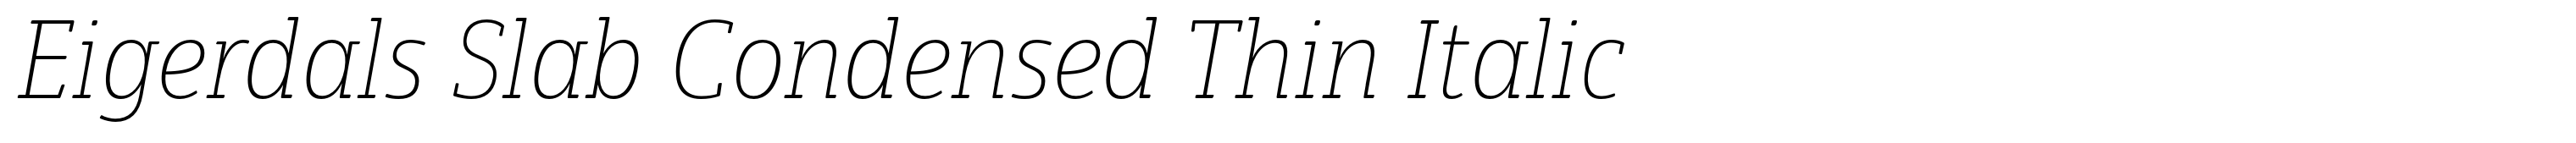 Eigerdals Slab Condensed Thin Italic